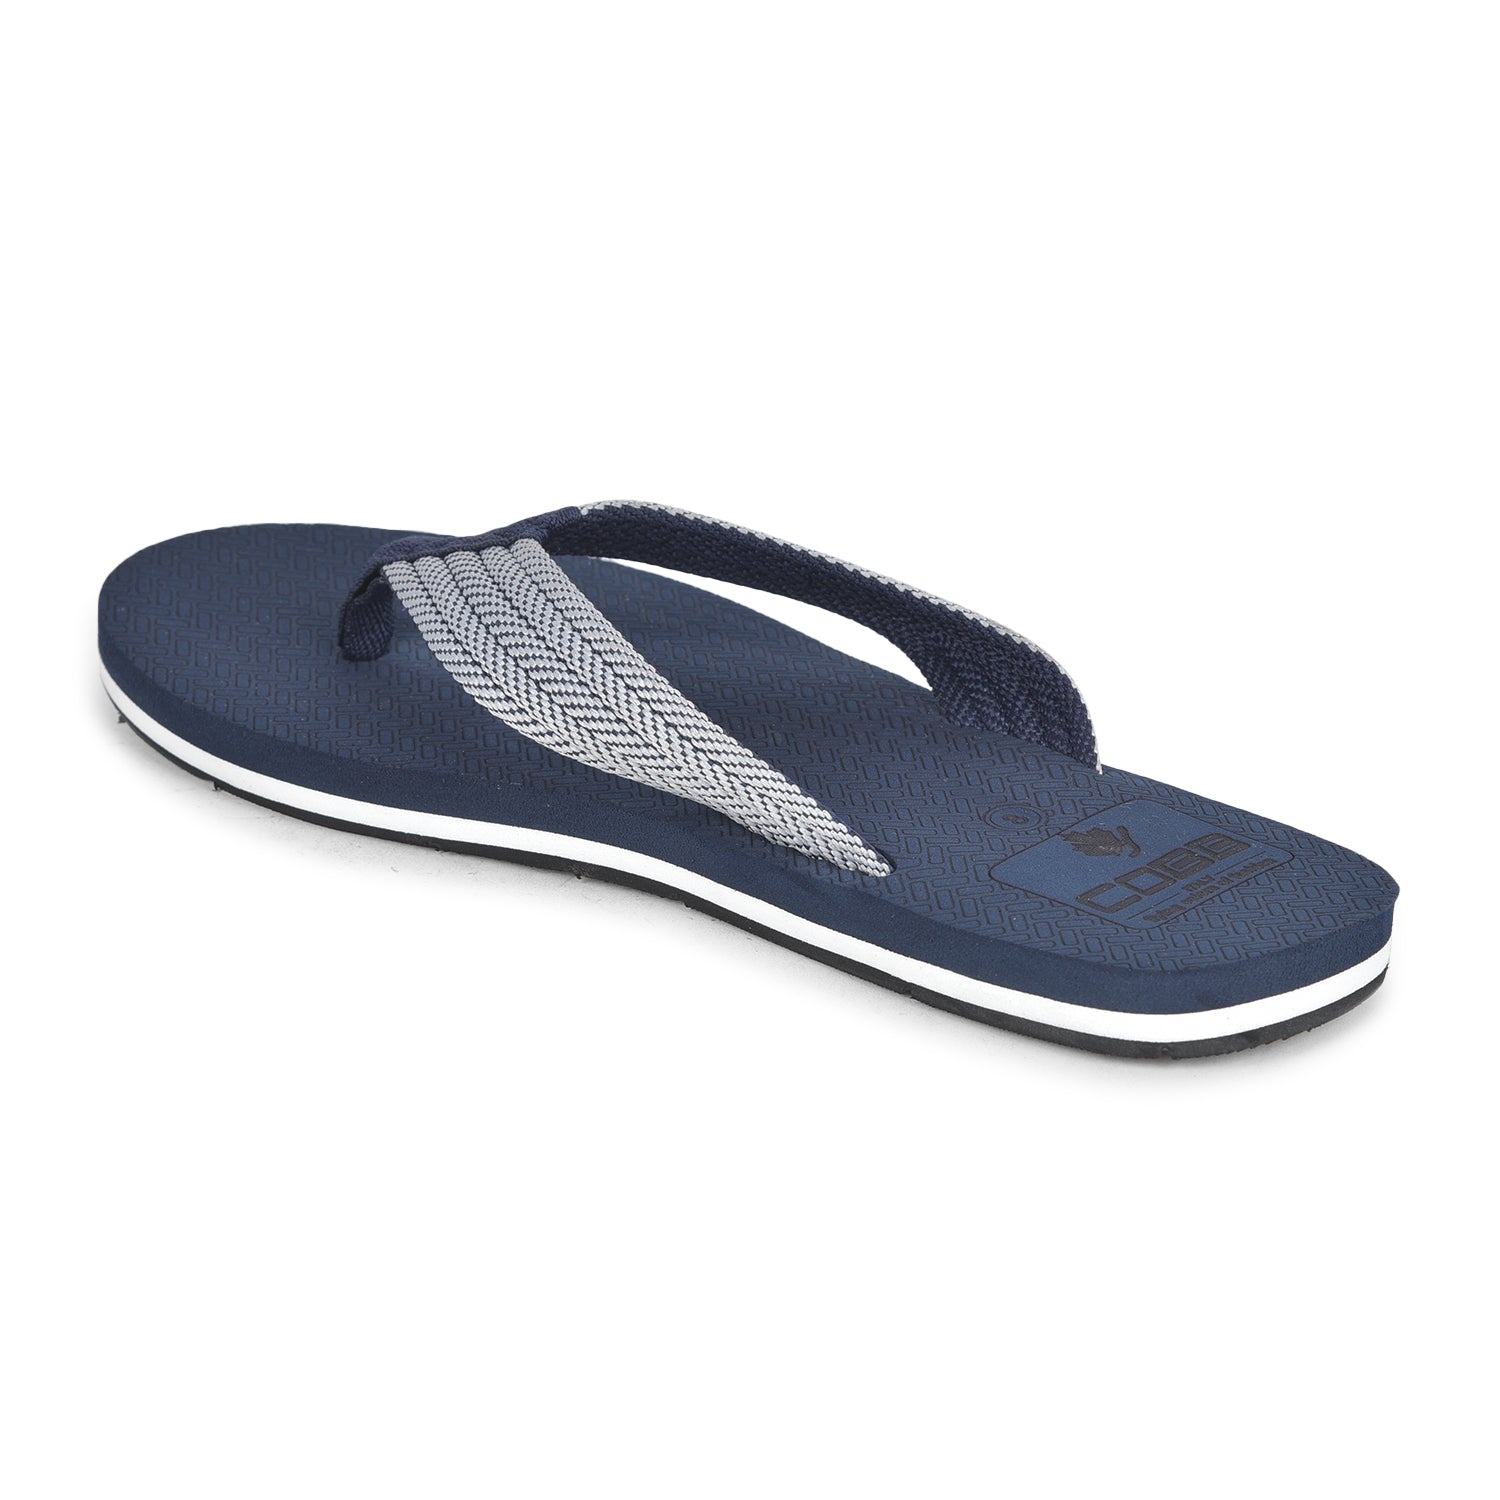 Cobb Mens Blue Soft Feet Slippers